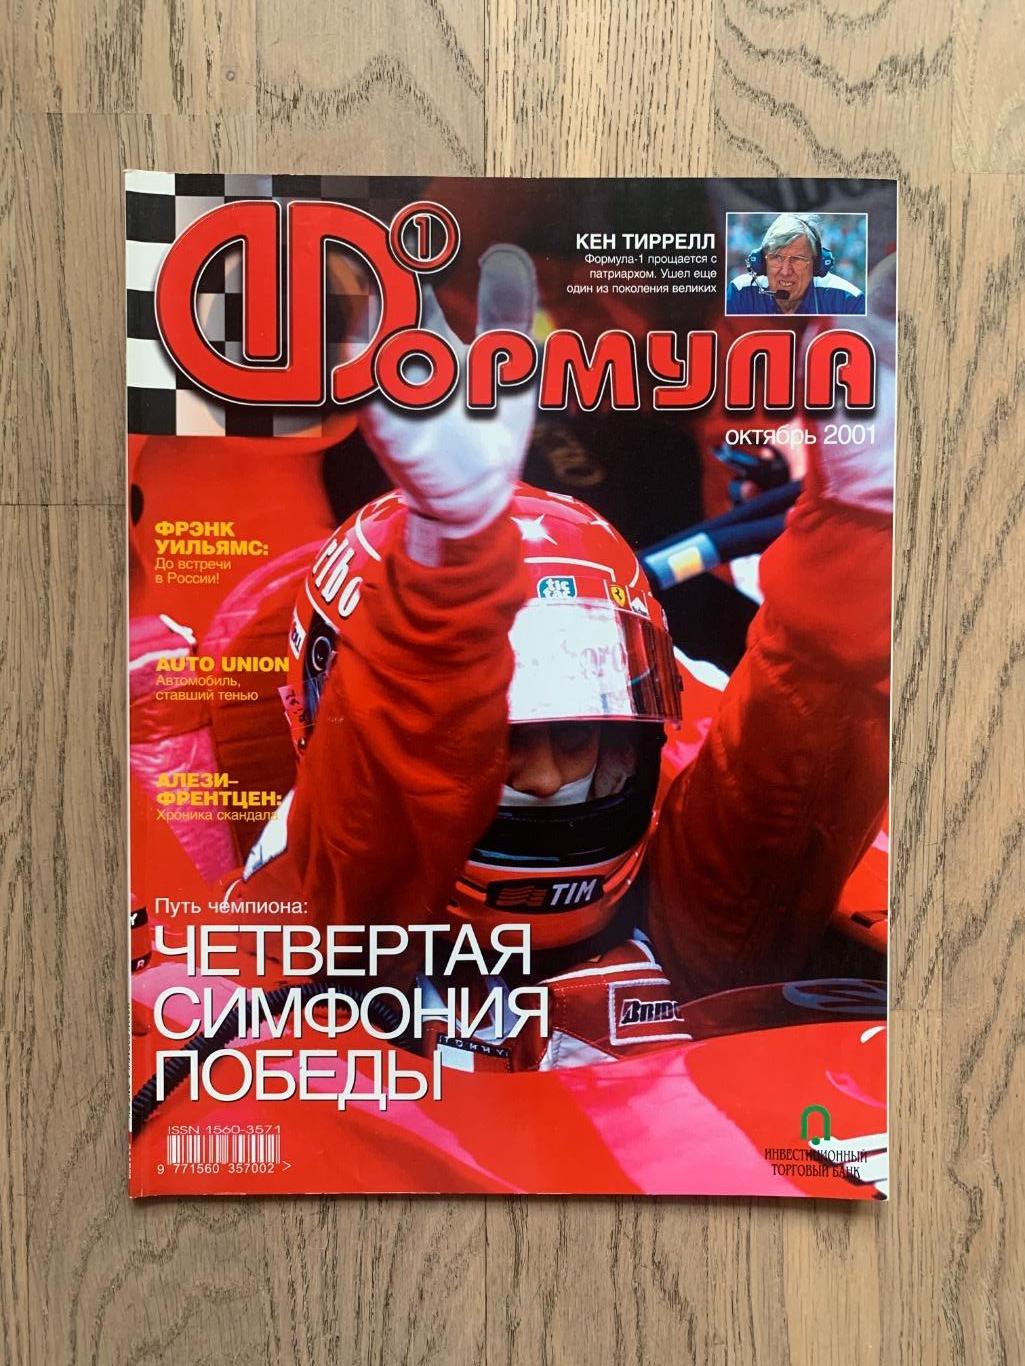 Журнал Формула 1 (Formula Magazine) / октябрь 2001